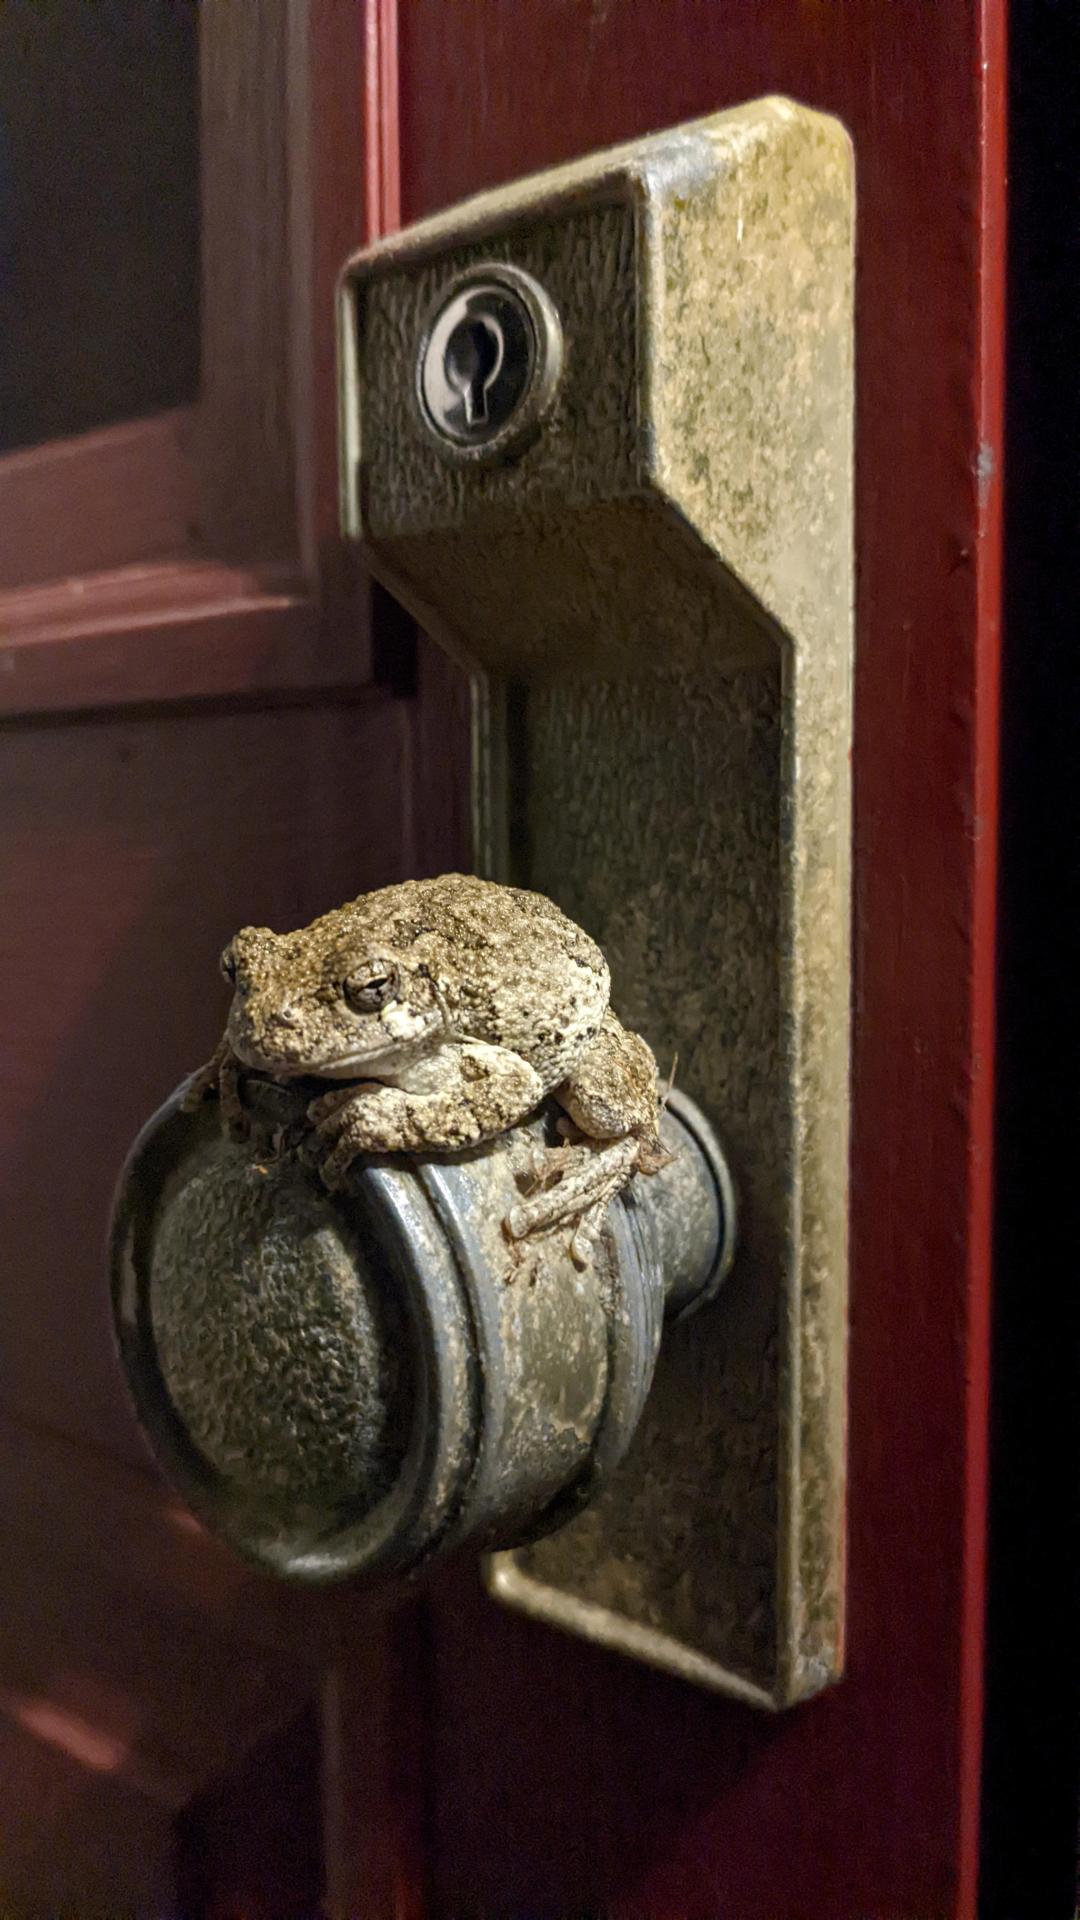 PsBattle: toad sitting on door knob #LOL#funny#photoshop#photos